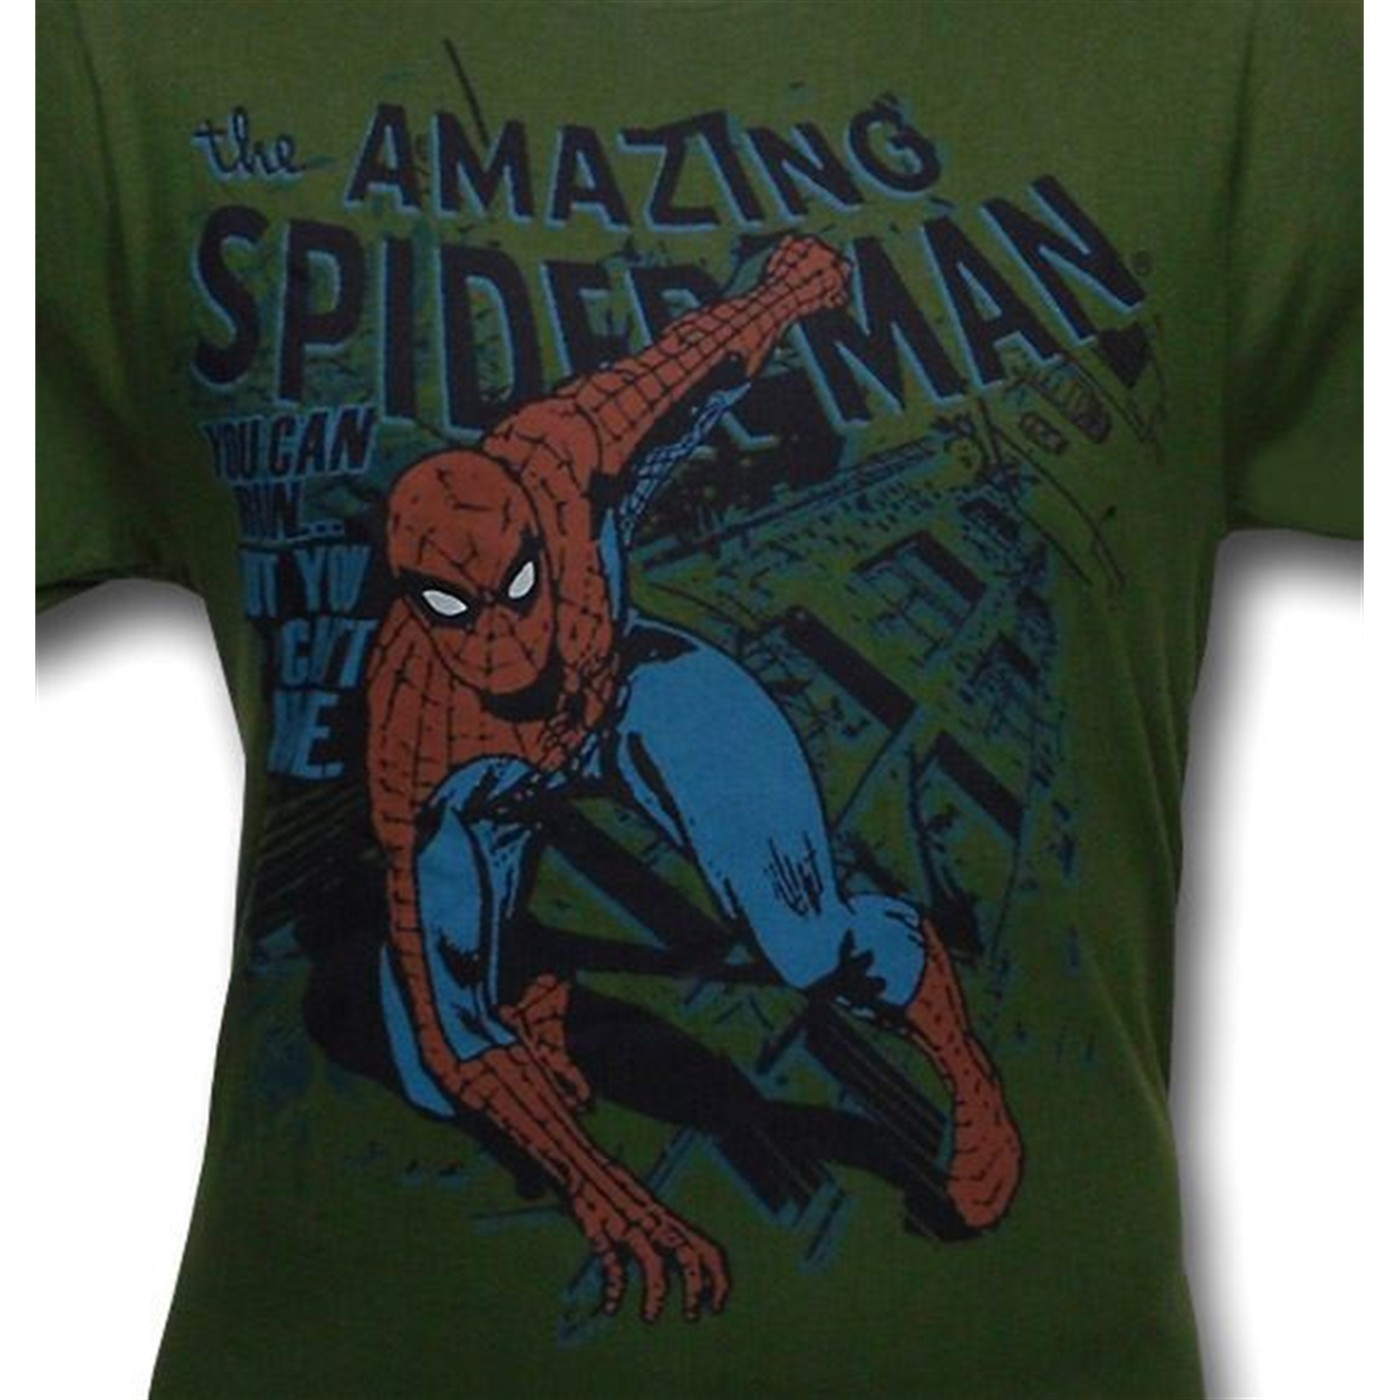 Spiderman You Can Run 30 Single T-Shirt